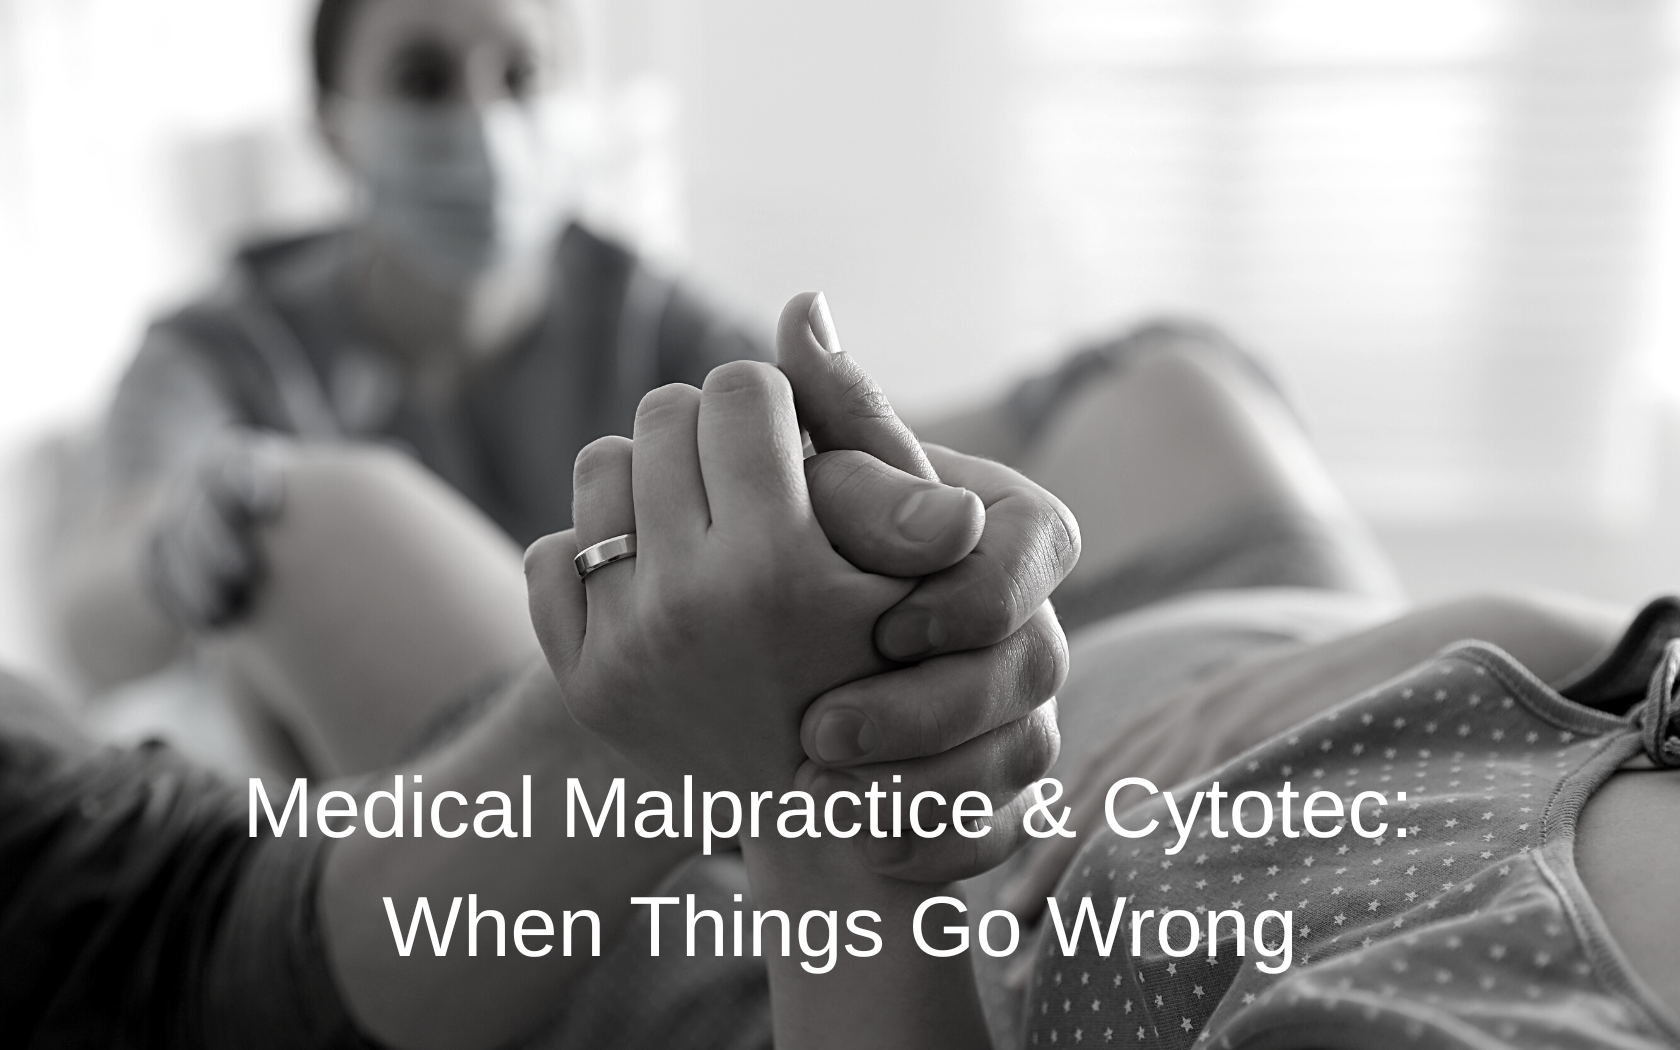 Childbirth complications due to Cytotec.